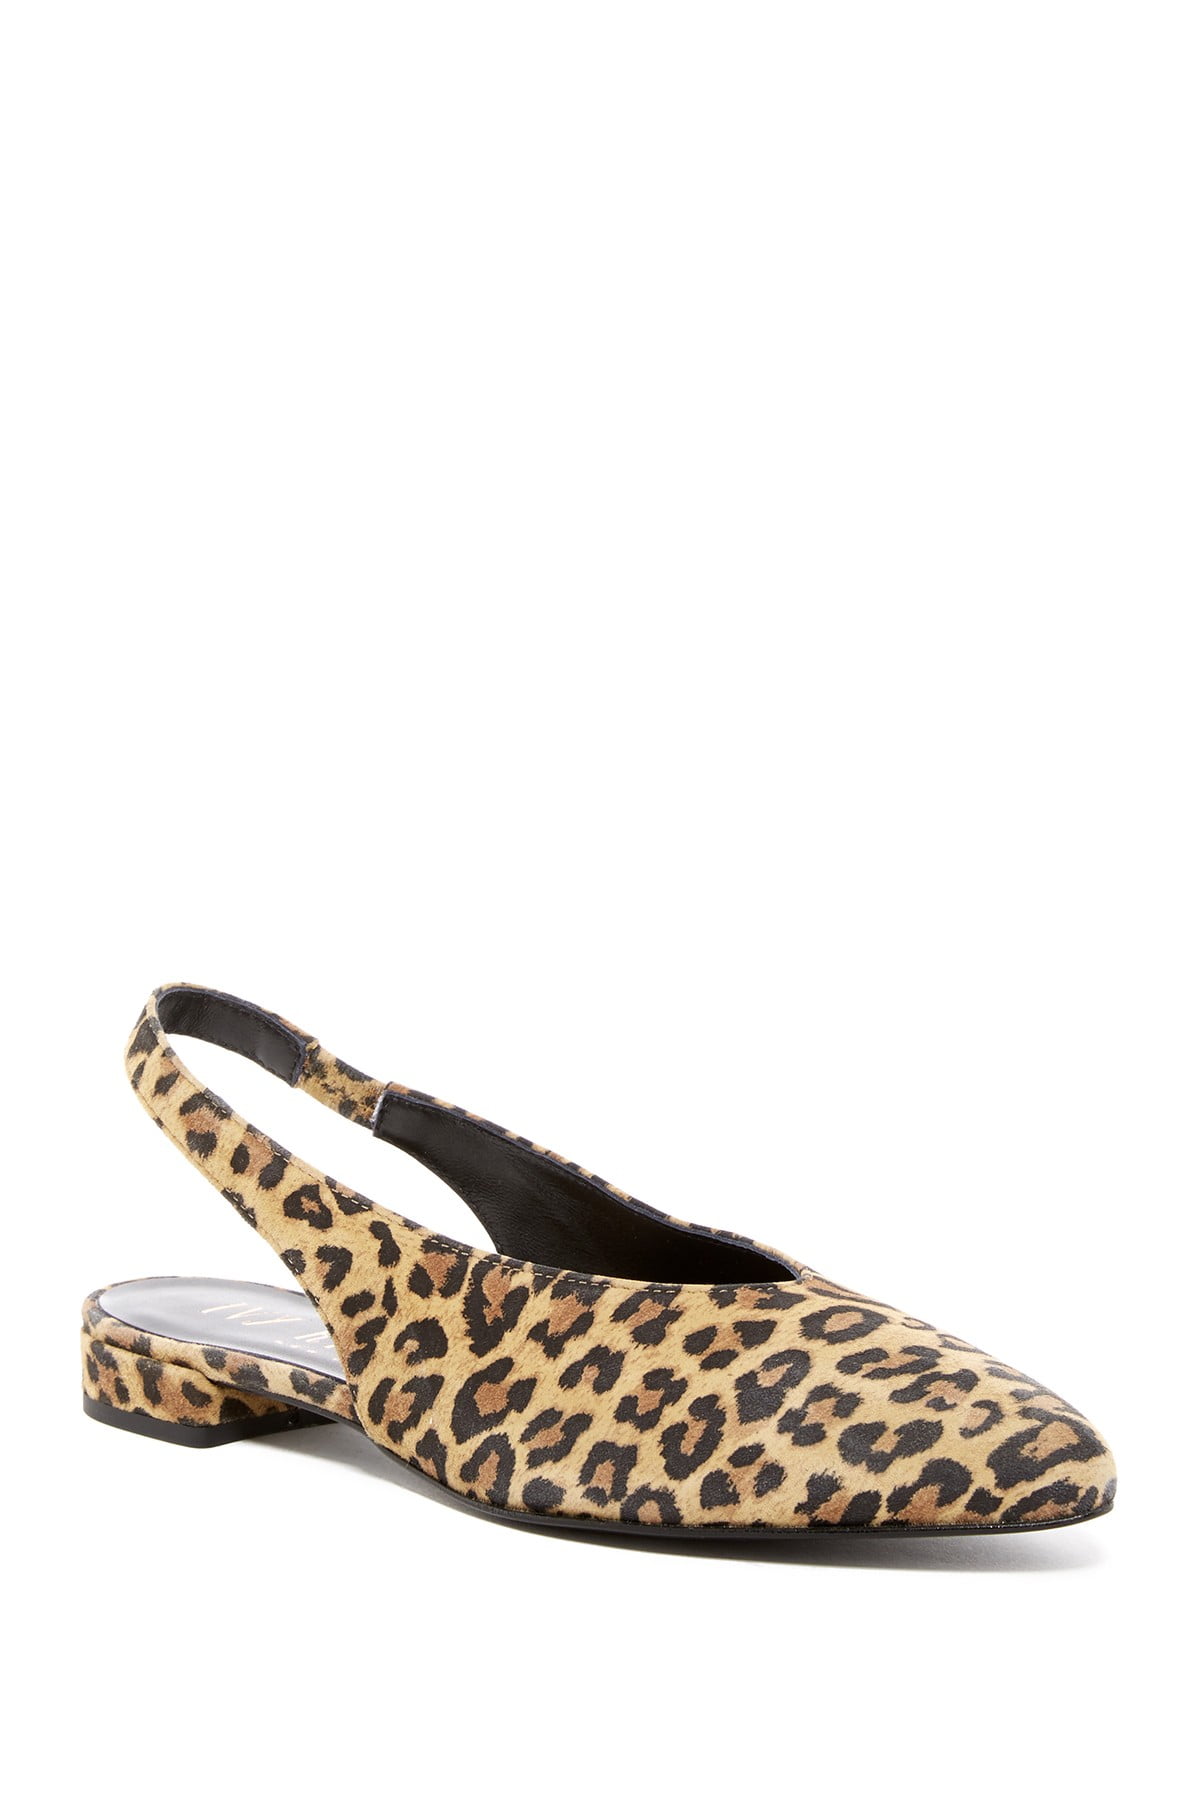 cheetah flat shoes